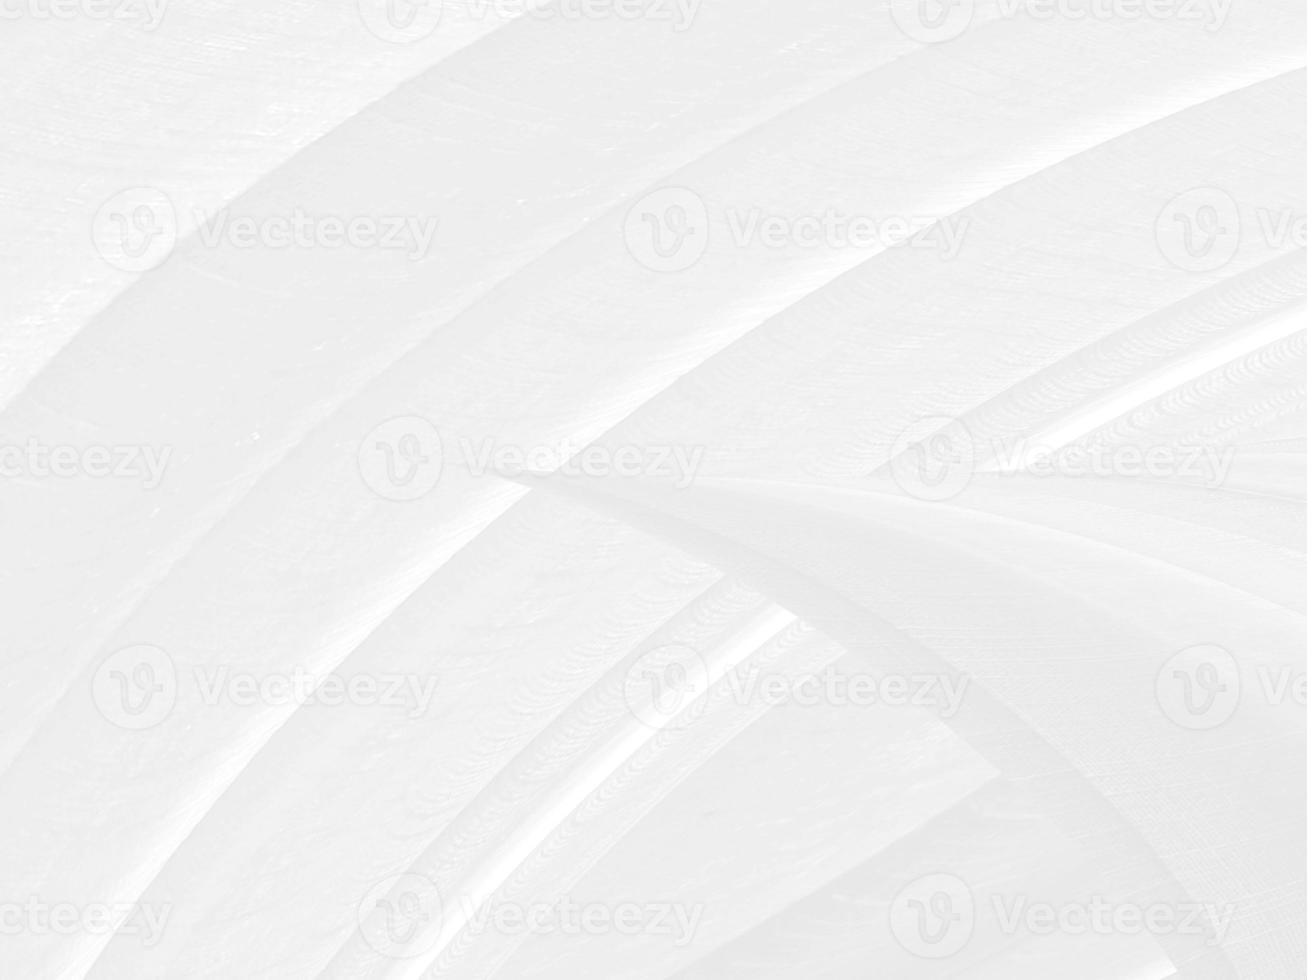 schoonheid wit abstract glad kromme zacht kleding stof vorm versieren mode textiel achtergrond foto